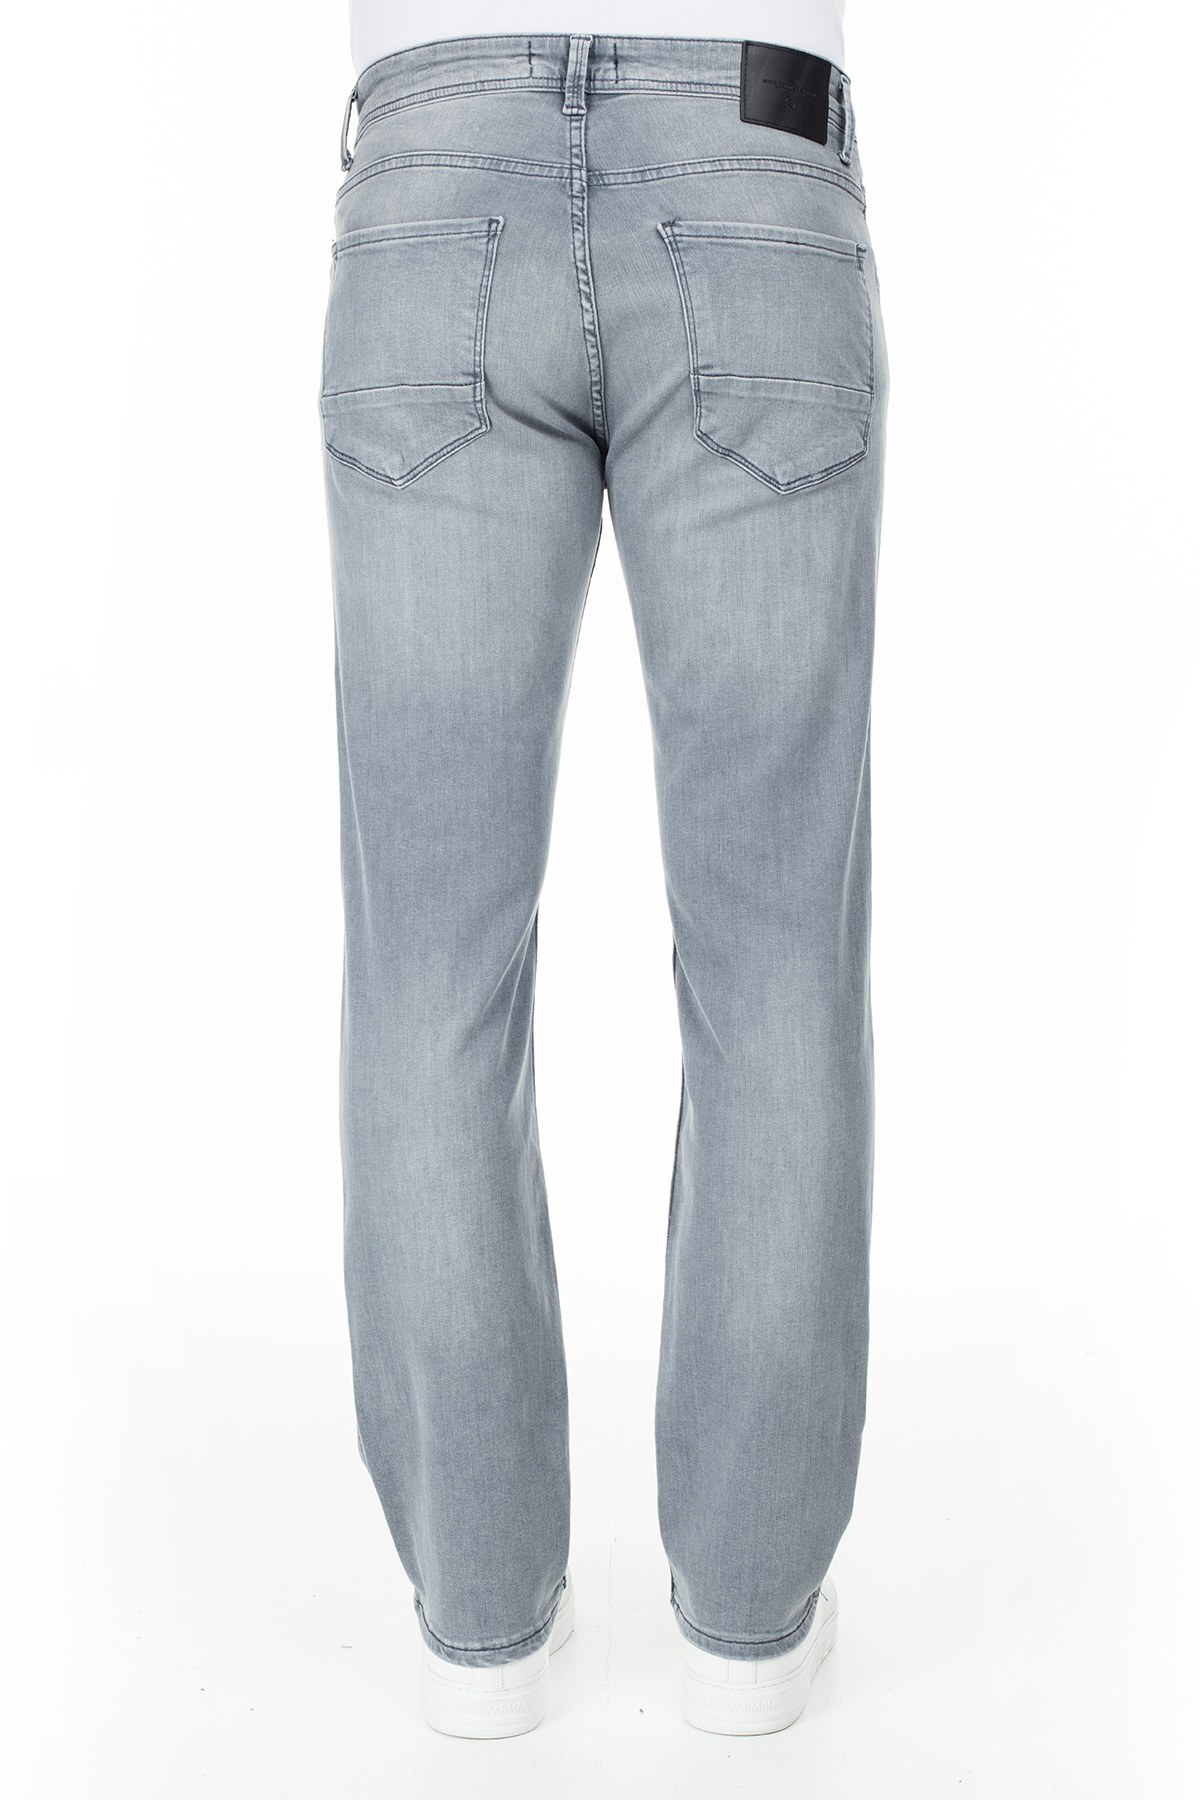 Exxe Jeans Erkek Kot Pantolon 7400S971KING GRİ